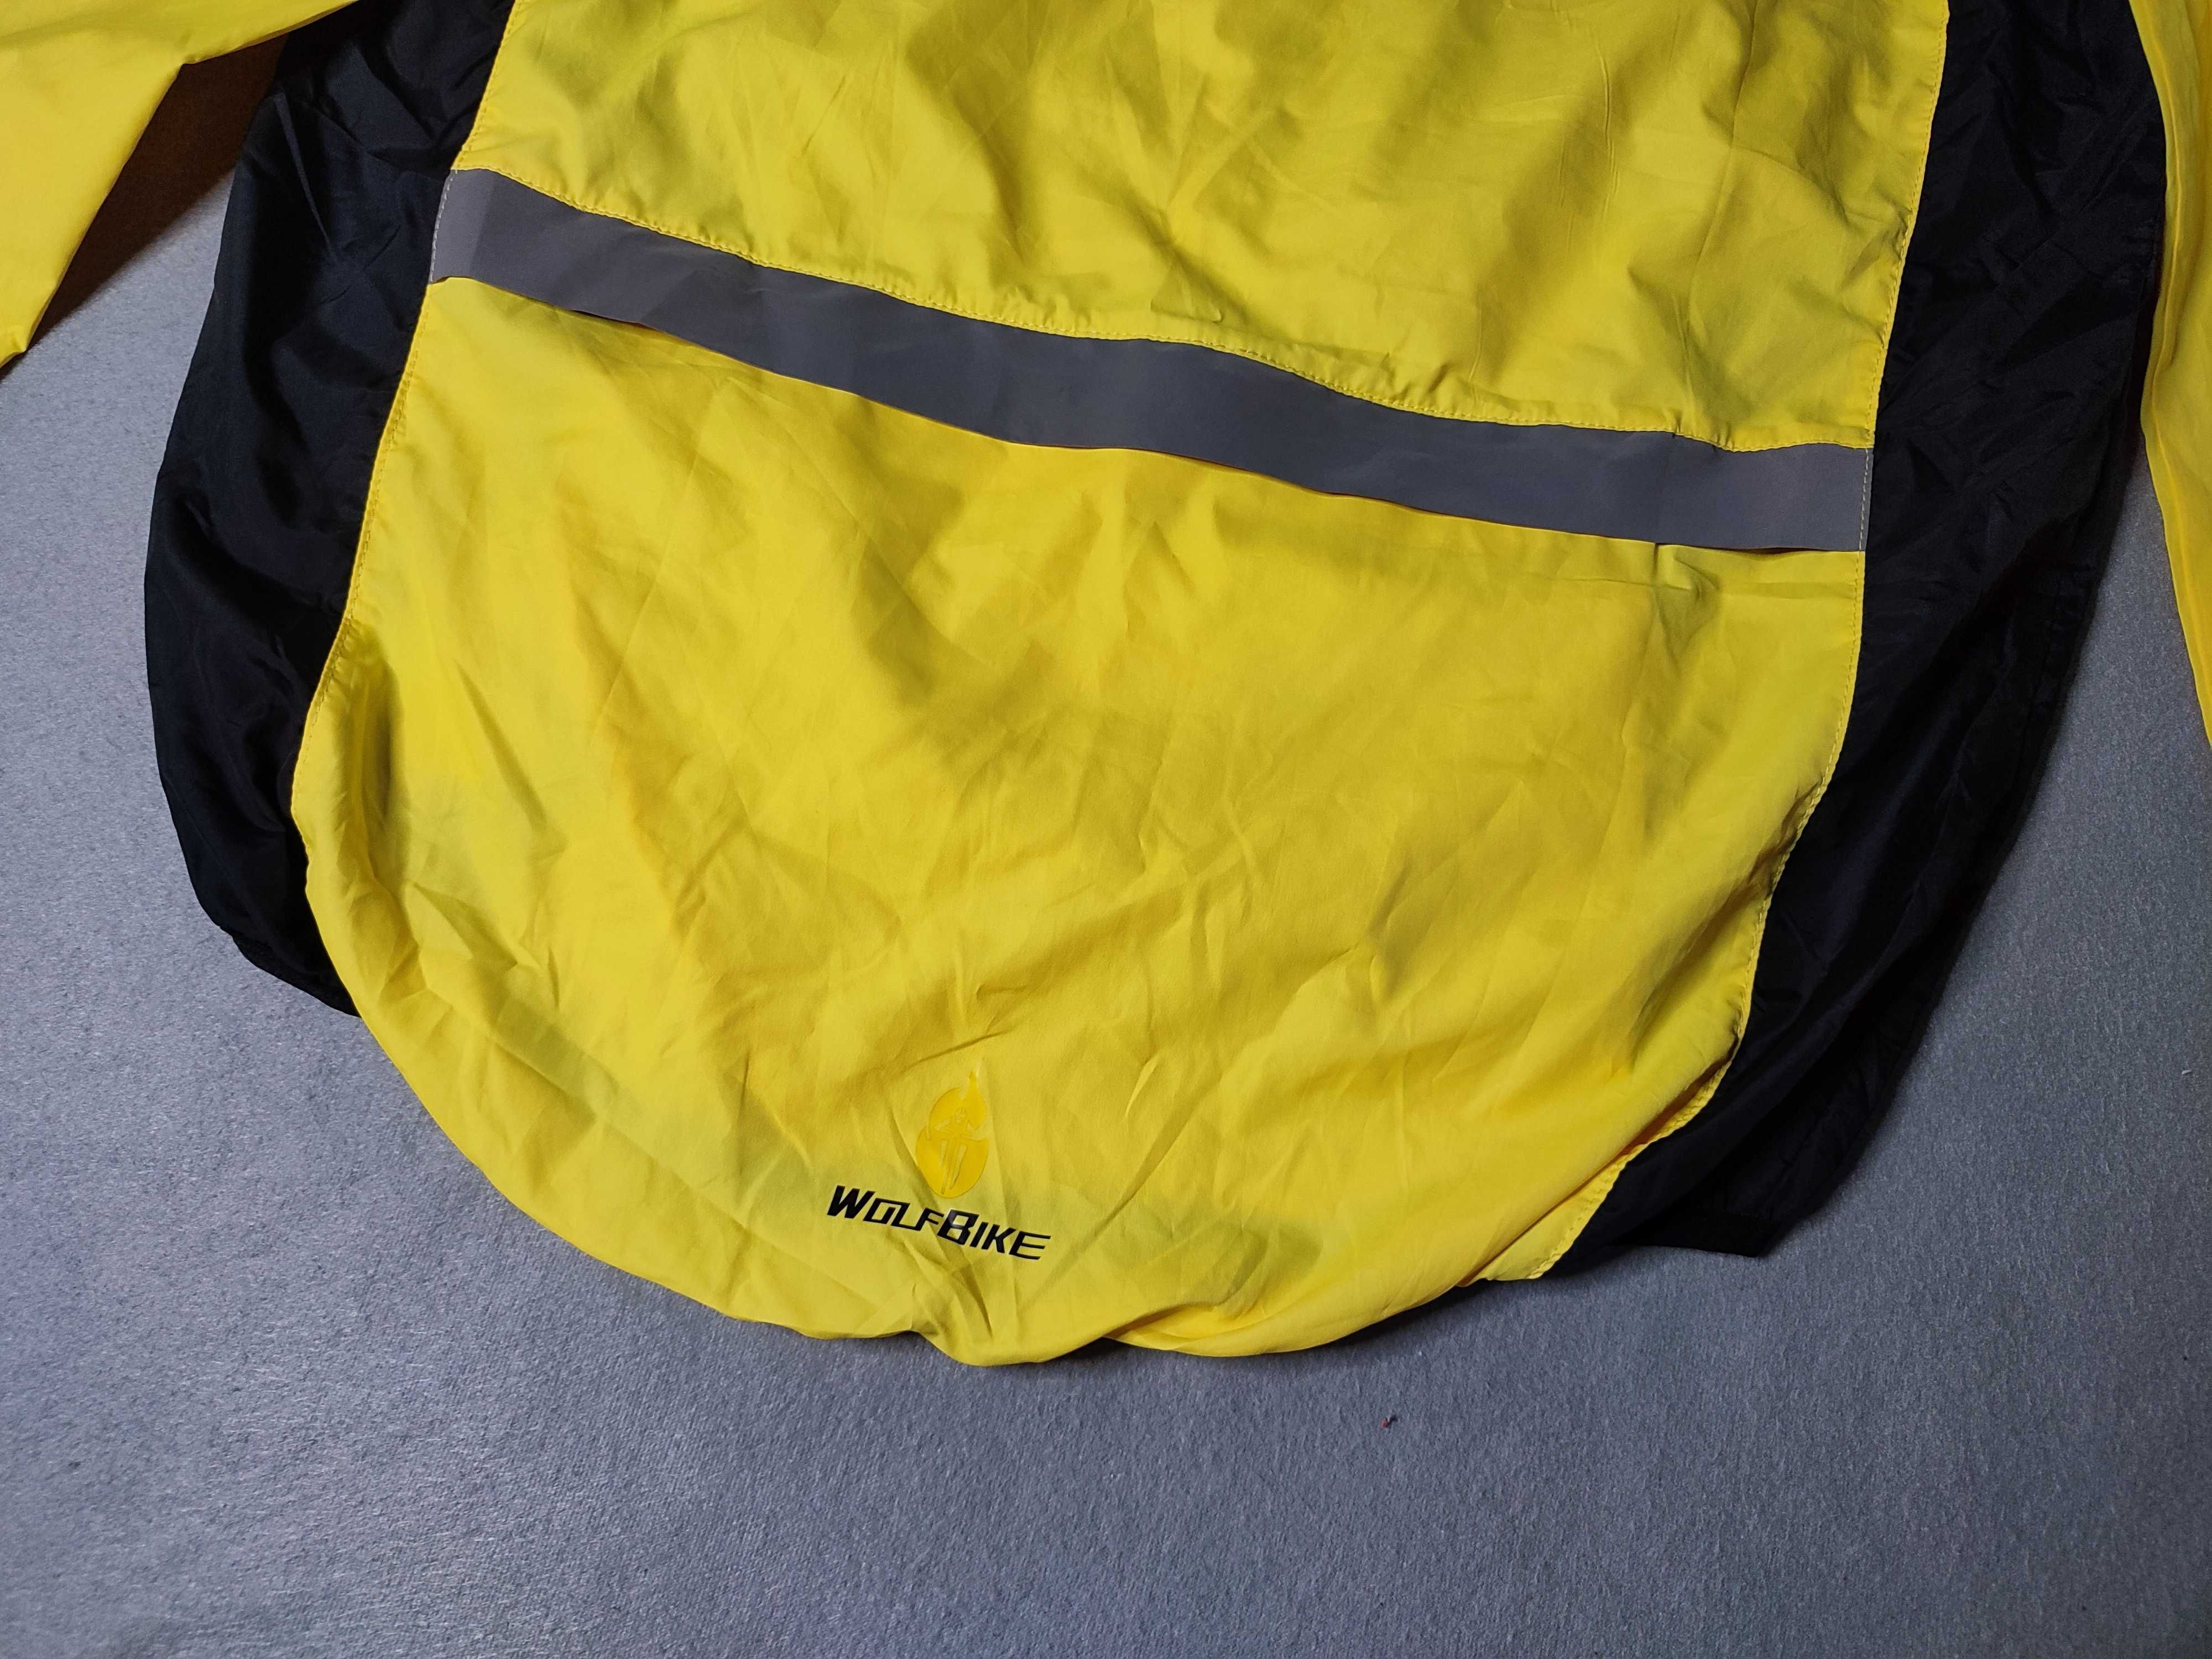 Спортивная куртка велосипедная, для бега Wolfbike р. M